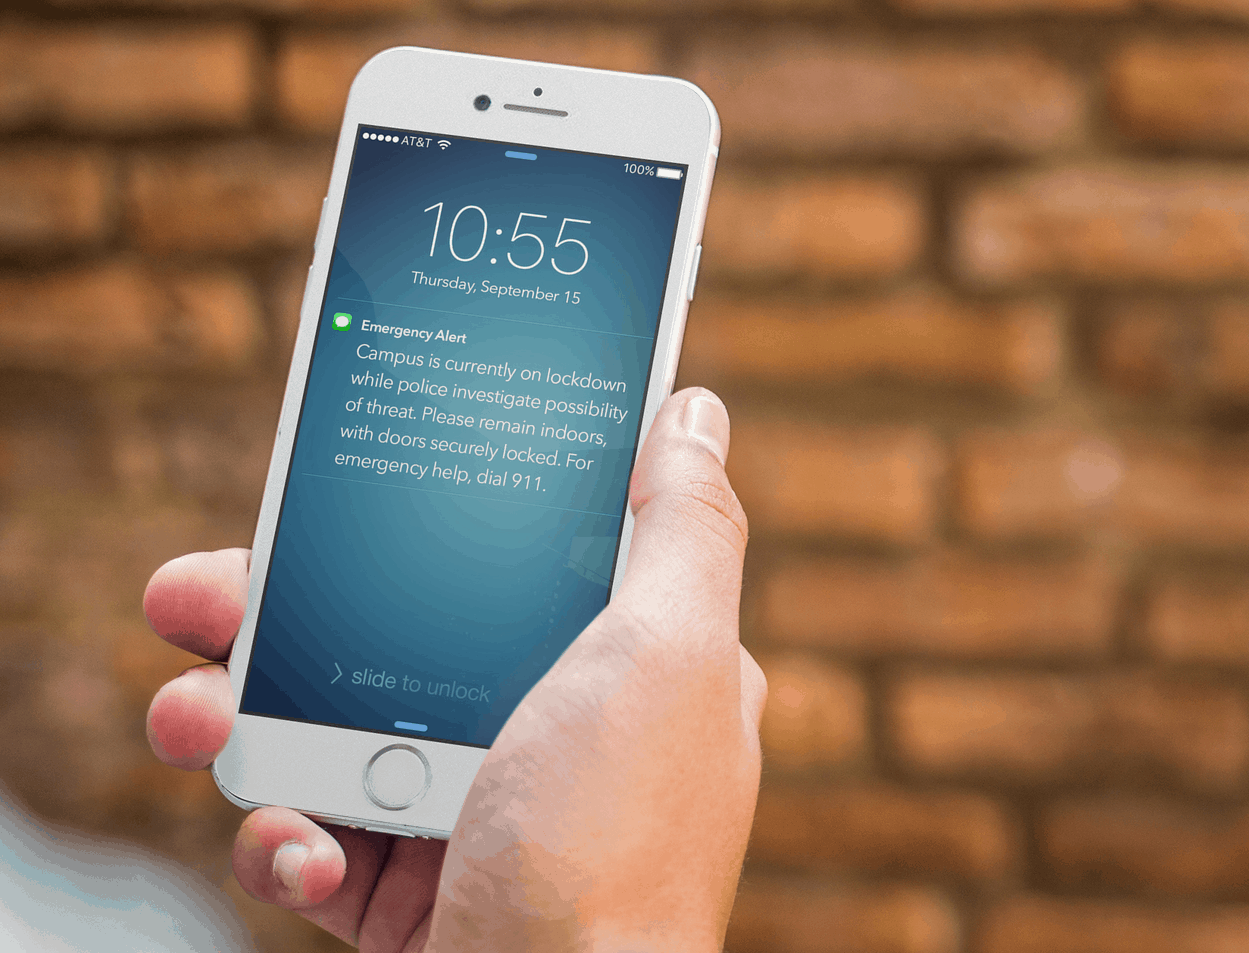 SMS Marketing to Deliver Emergency Alerts via SMS